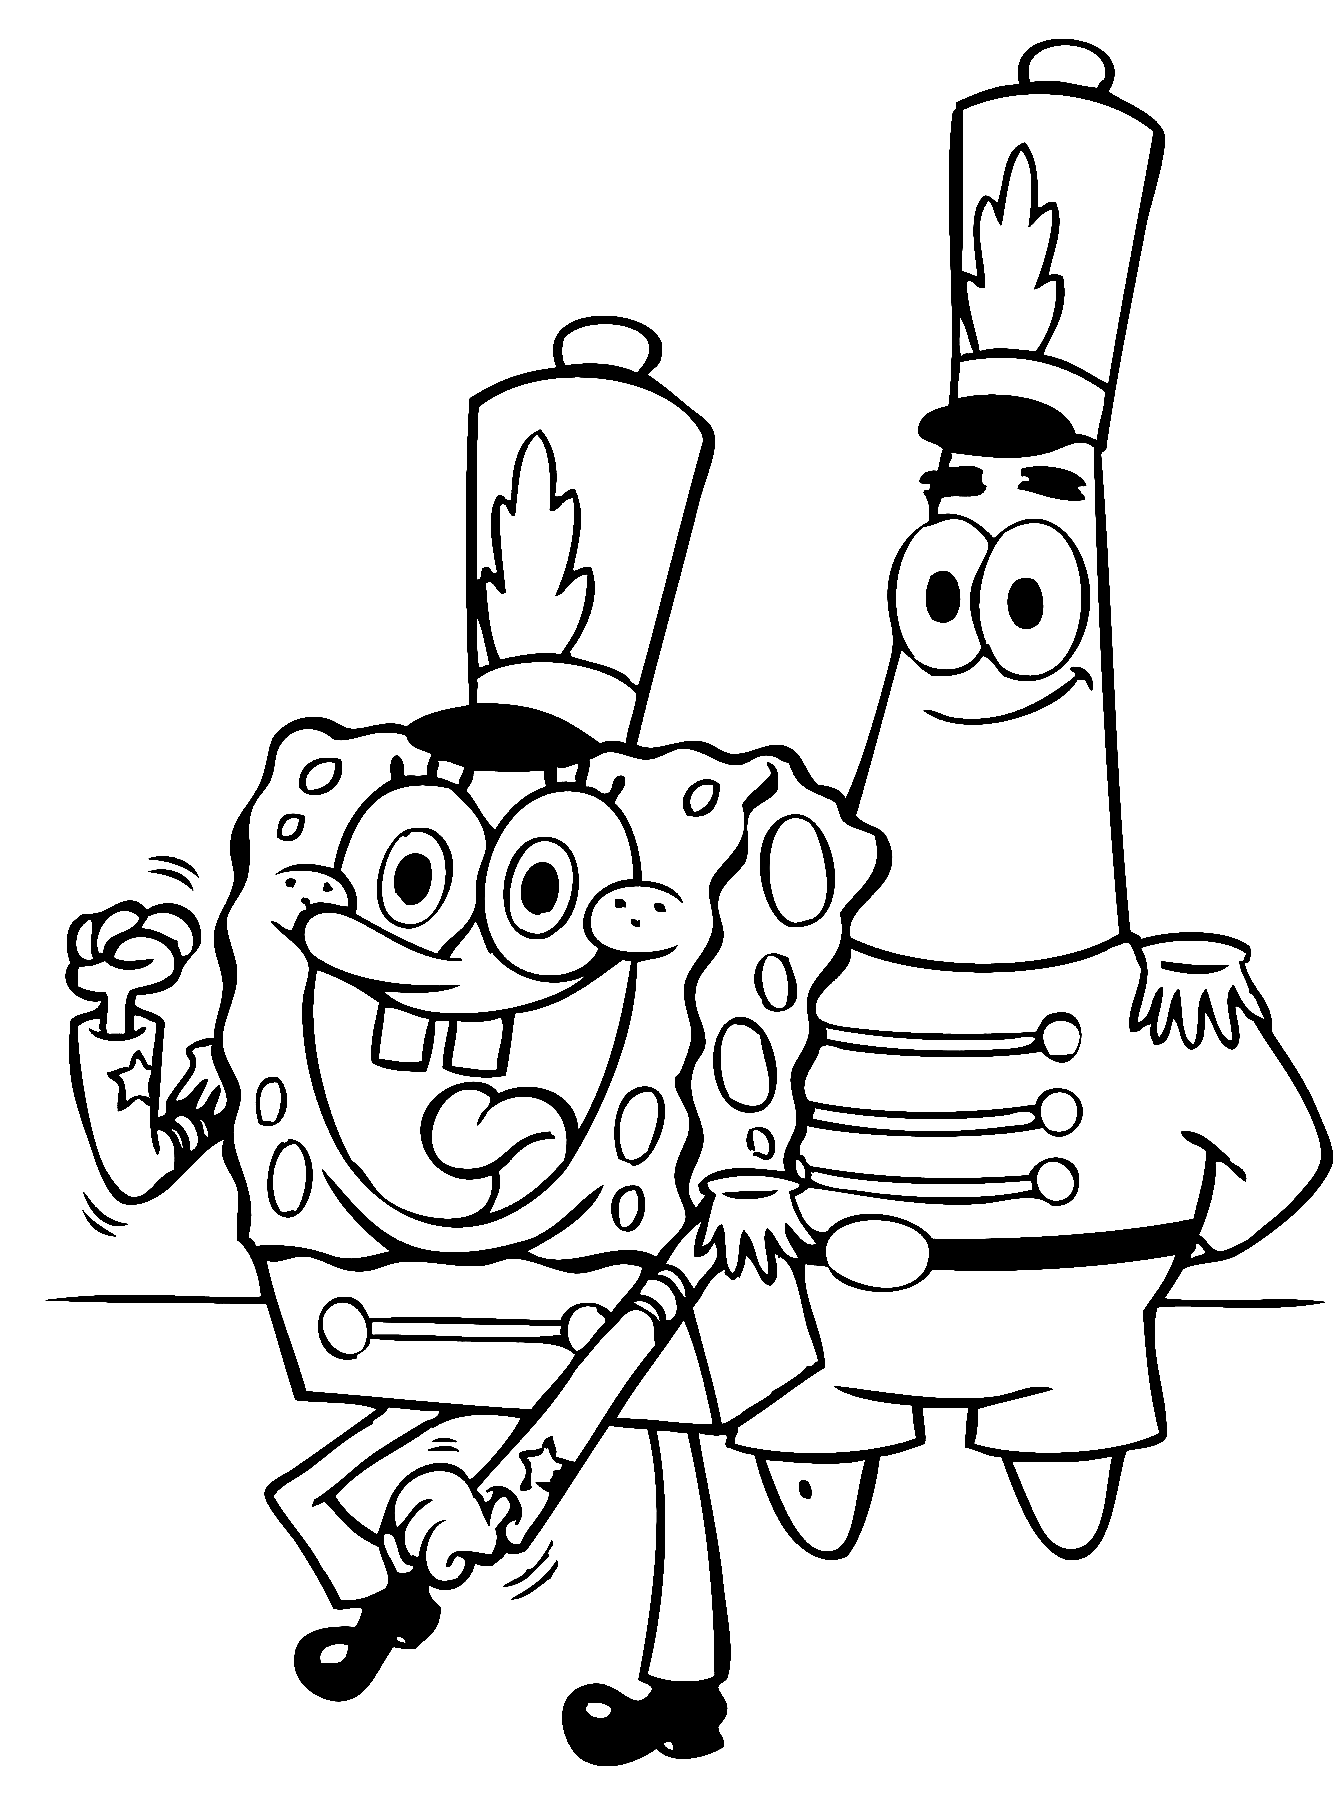 Patrick And Spongebob Coloring Page